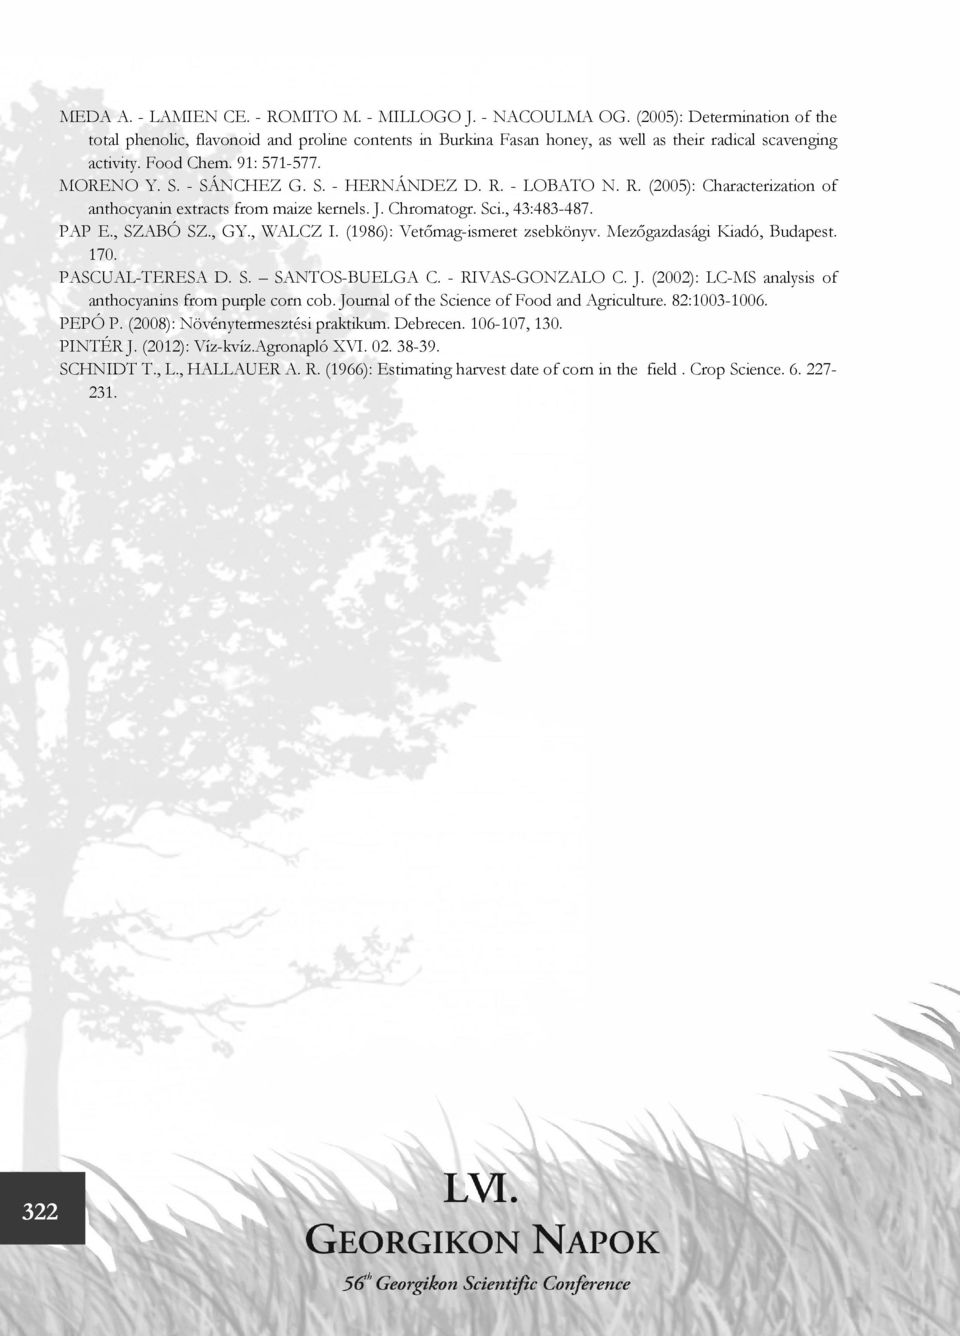 R. - LOBATO N. R. (2005): Characterization of anthocyanin extracts from maize kernels. J. Chromatogr. Sci., 43:483-487. PAP E., SZABÓ SZ., GY., WALCZ I. (1986): Vetőmag-ismeret zsebkönyv.